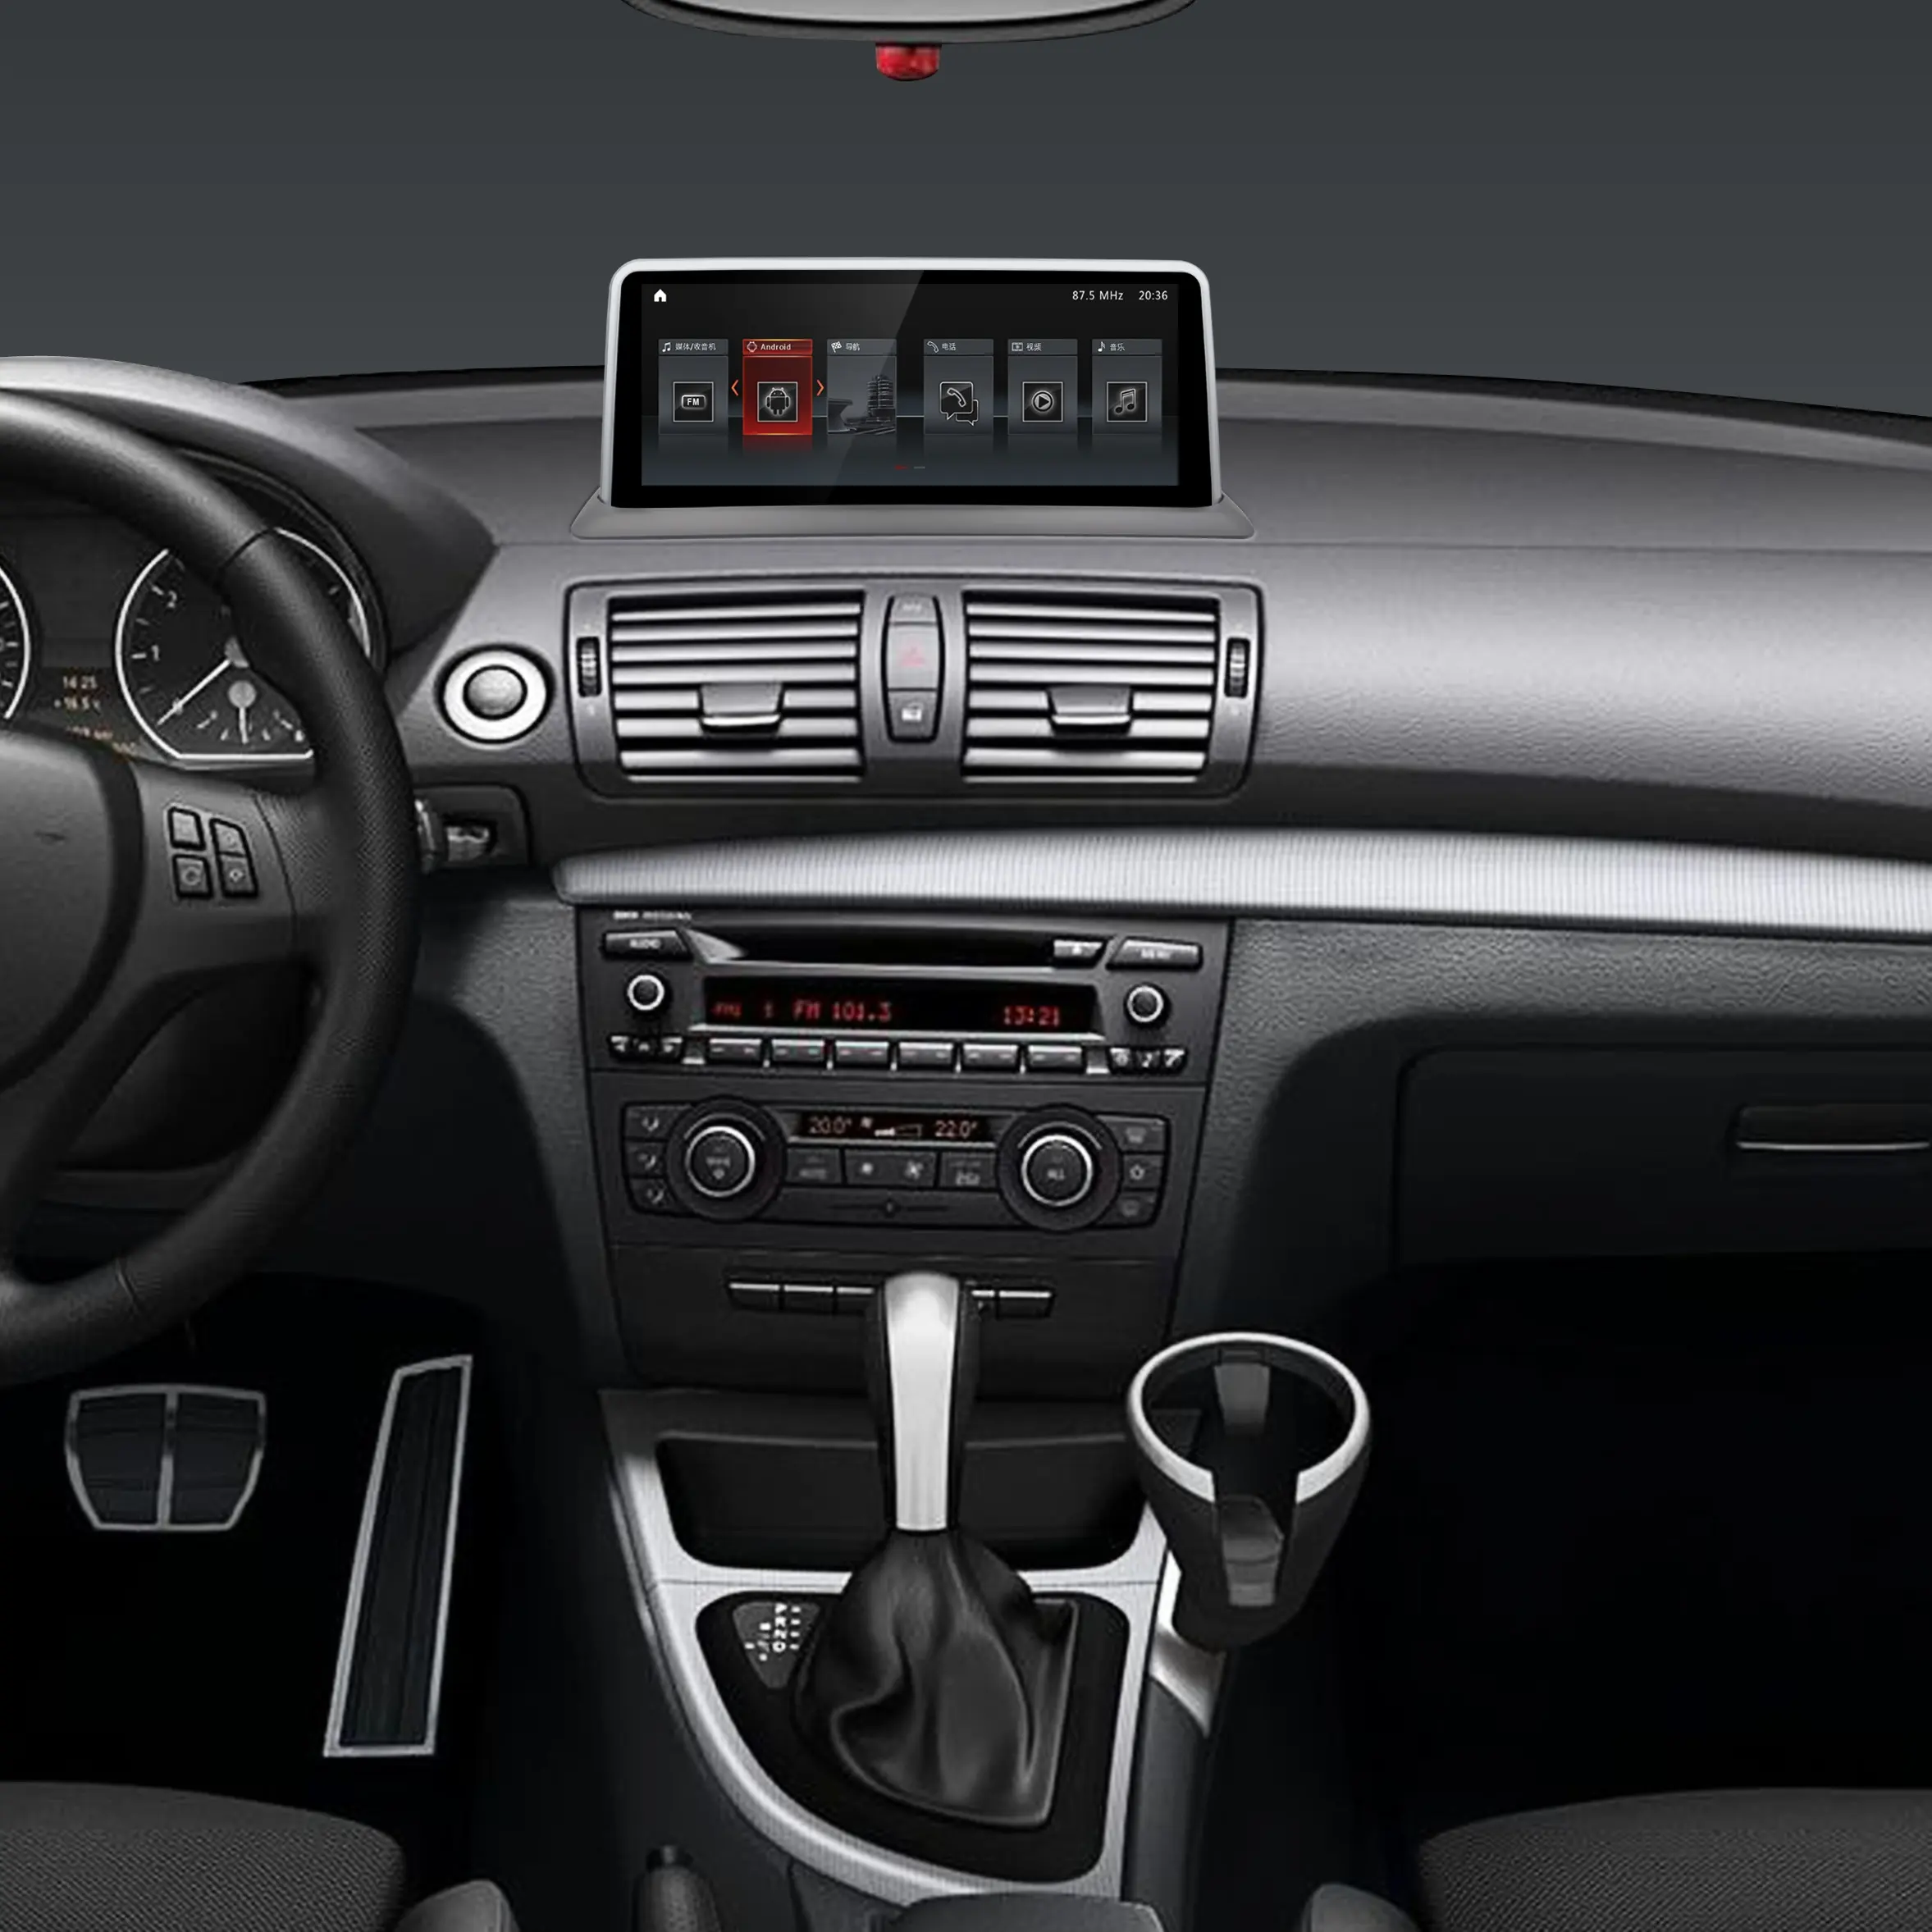 UPSZTEC 10.25 "Car Player Android 10.0 IPS Screen Auto Radio Navigation For BMW 1 Series E87 E81 E82 E88 04-12 CCC CIC System